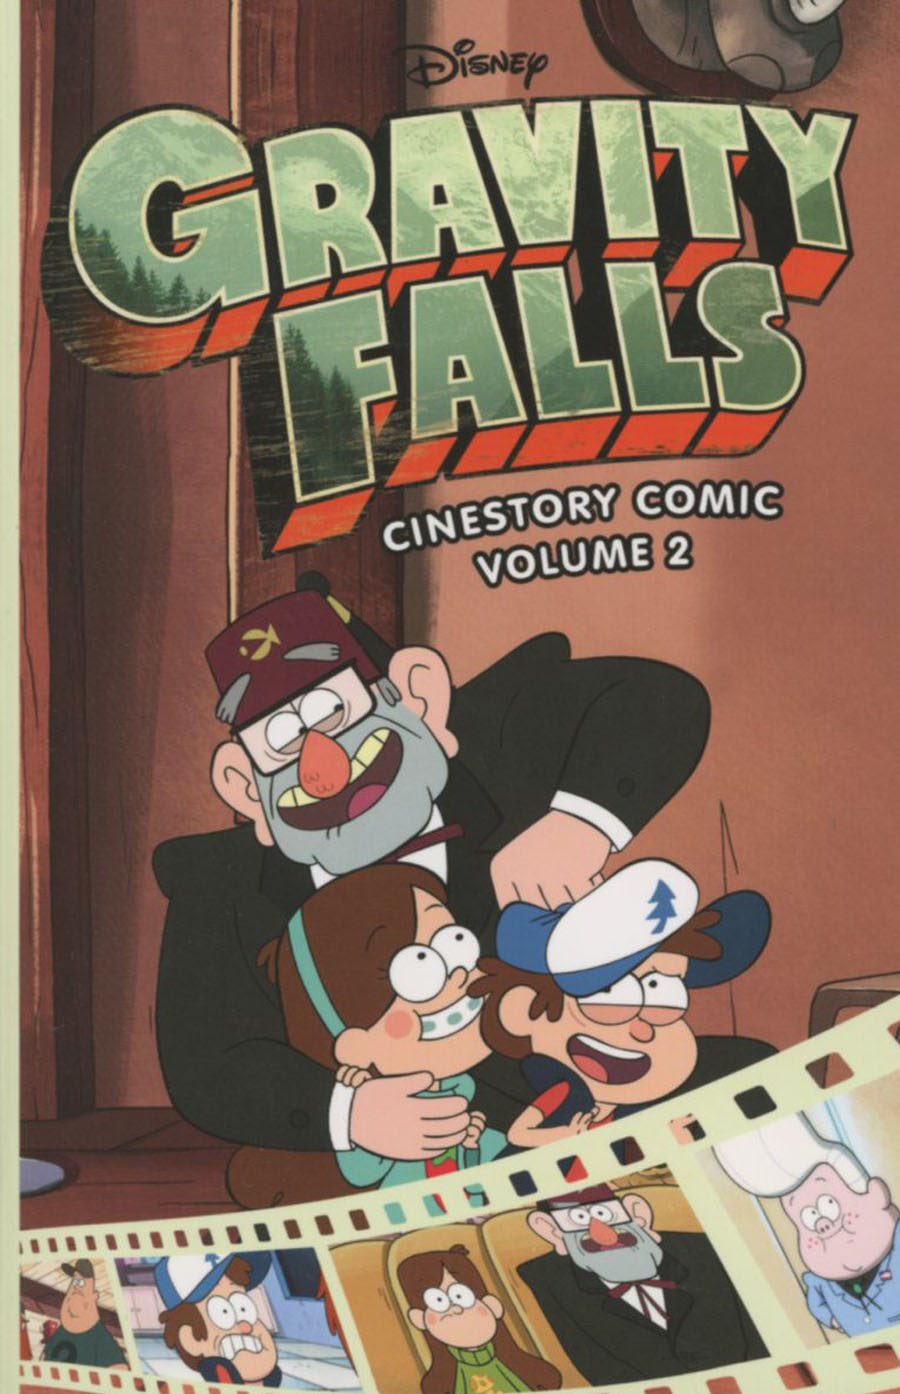 Disney Gravity Falls Cinestory Comic Vol 2 SC